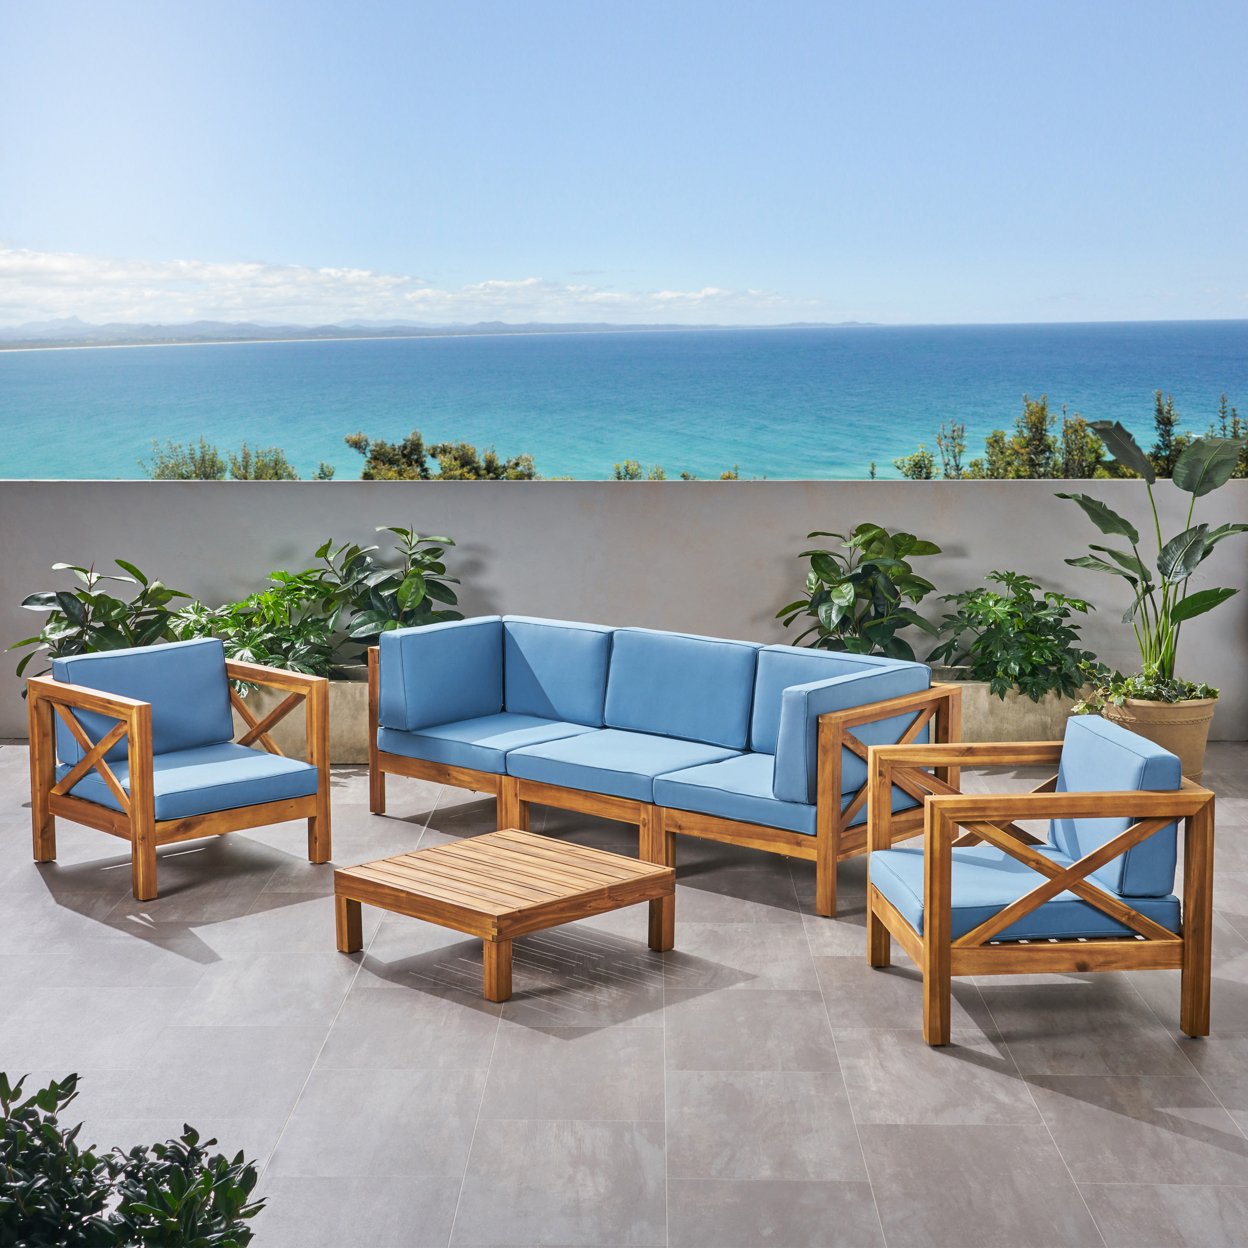 Morgan Outdoor 5 Seater Acacia Wood Sofa Chat Set - Teak Finish + Blue